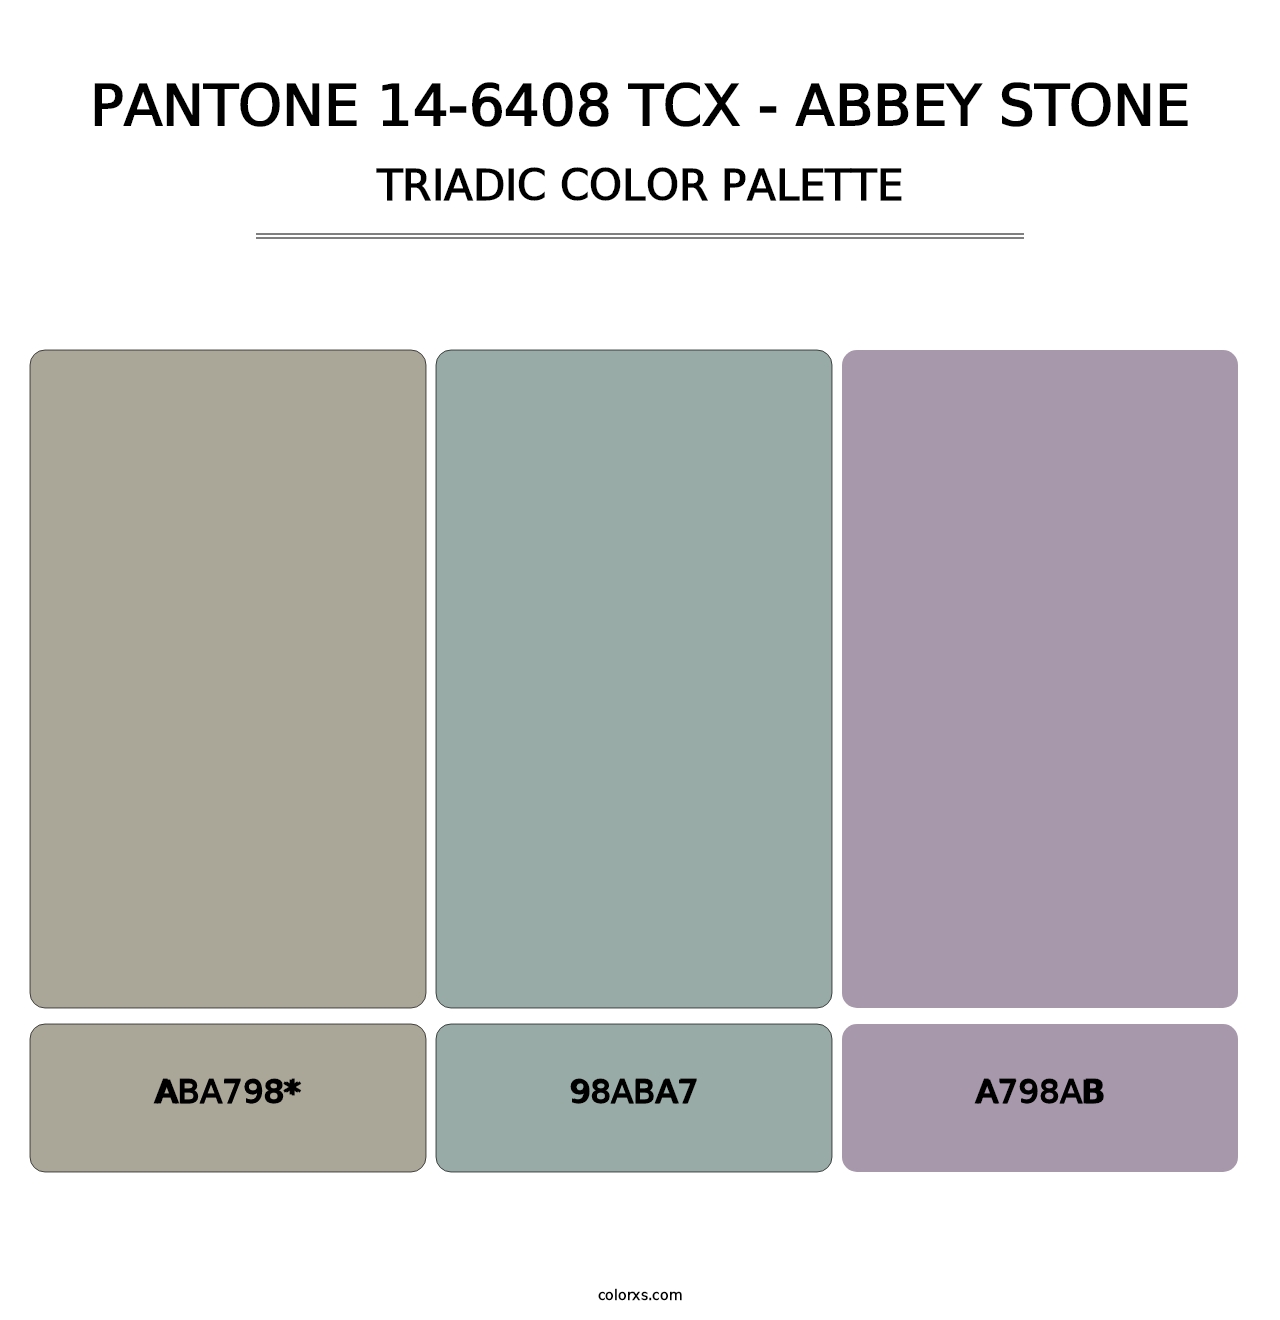 PANTONE 14-6408 TCX - Abbey Stone - Triadic Color Palette